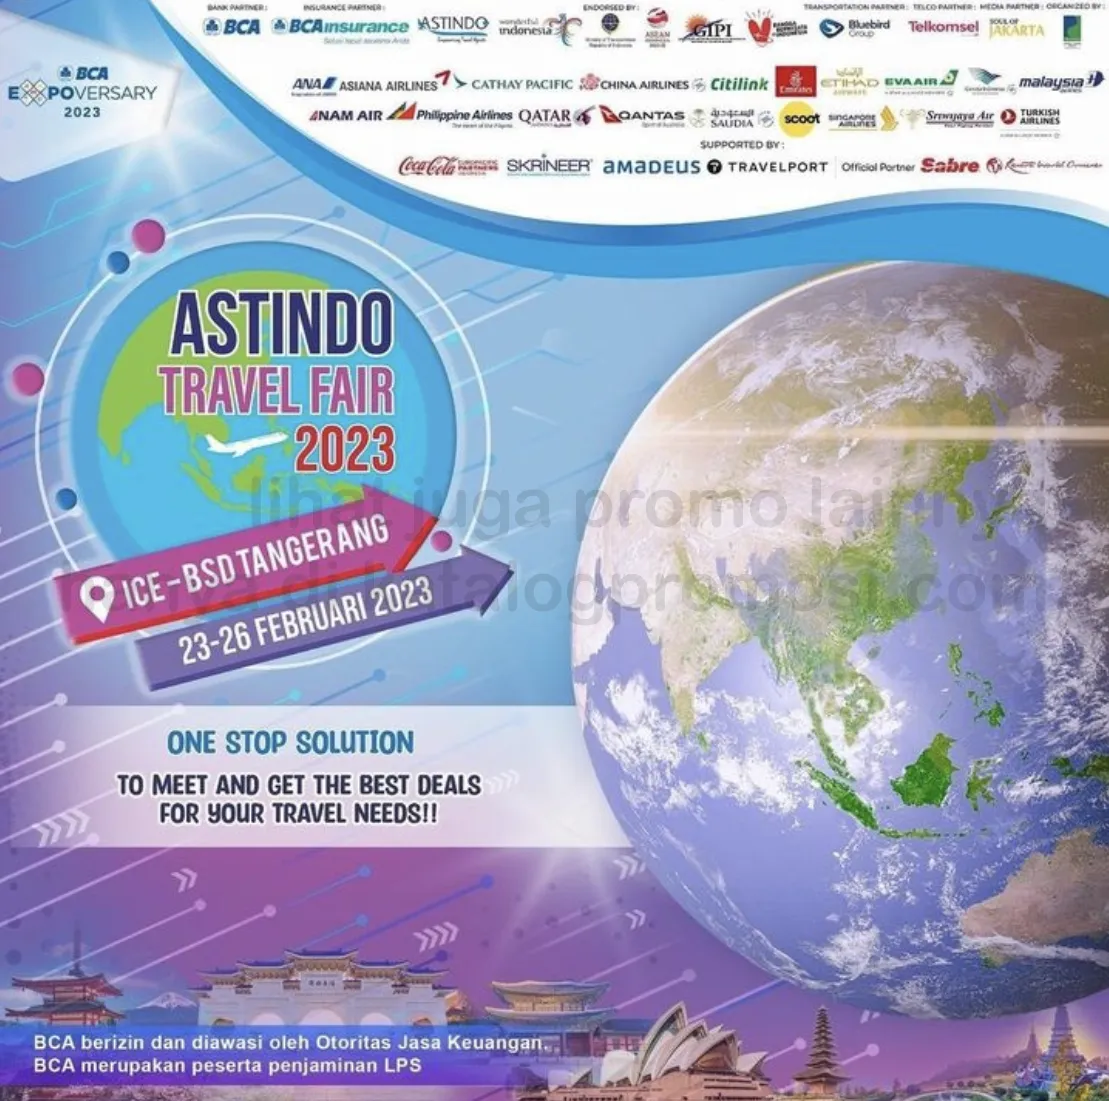 ASTINDO Travel Fair 2023 di Indonesia Convention Exhibition (ICE) - BSD